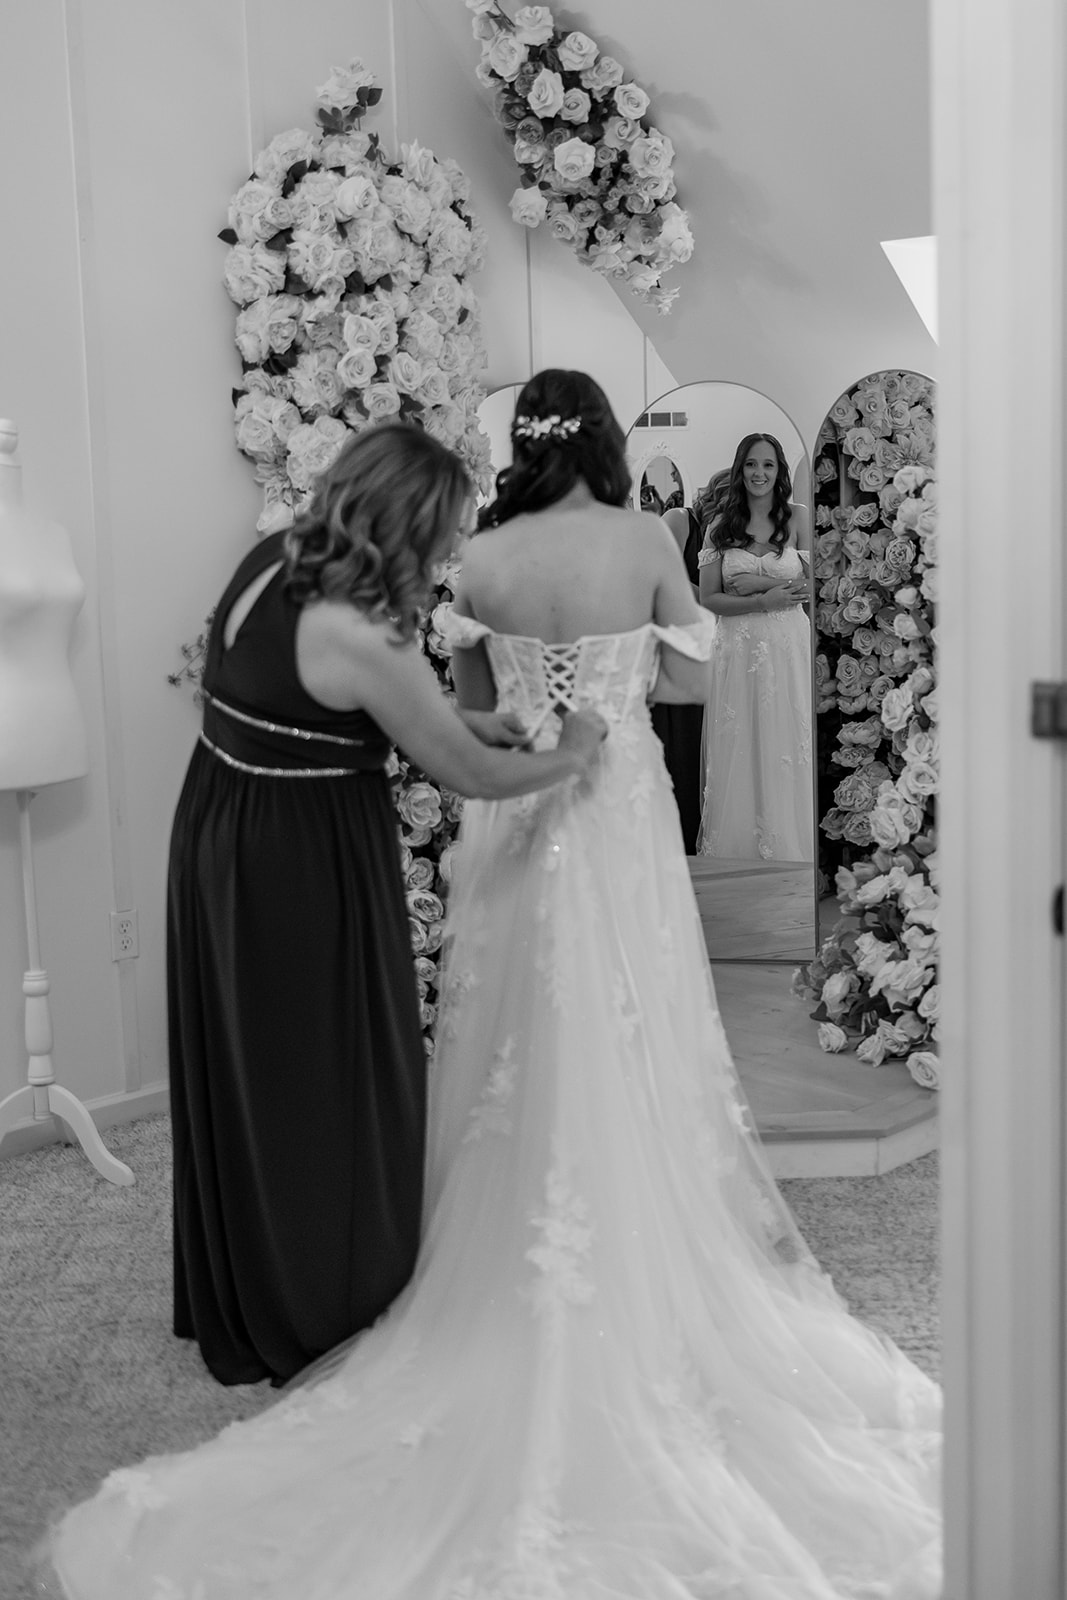 Brides mom helps her put on her wedding dress